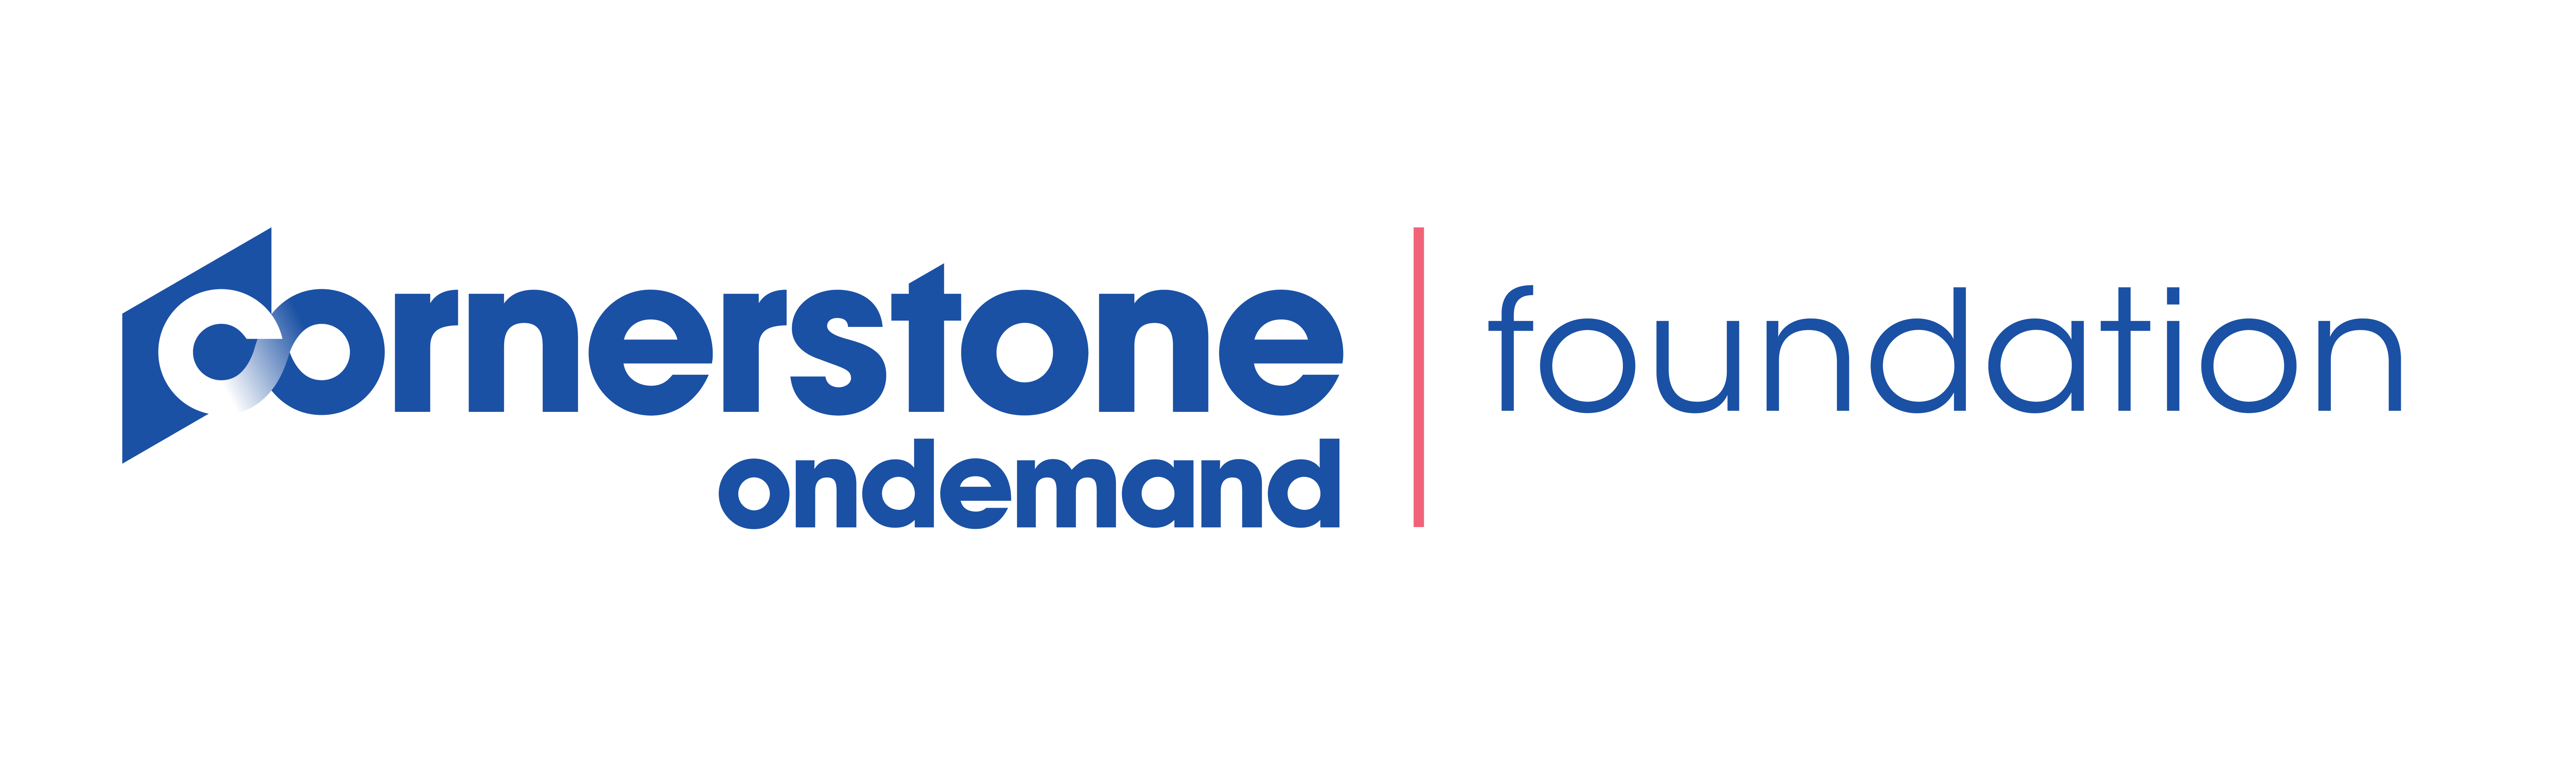 Cornerstone OnDemand Foundation logo